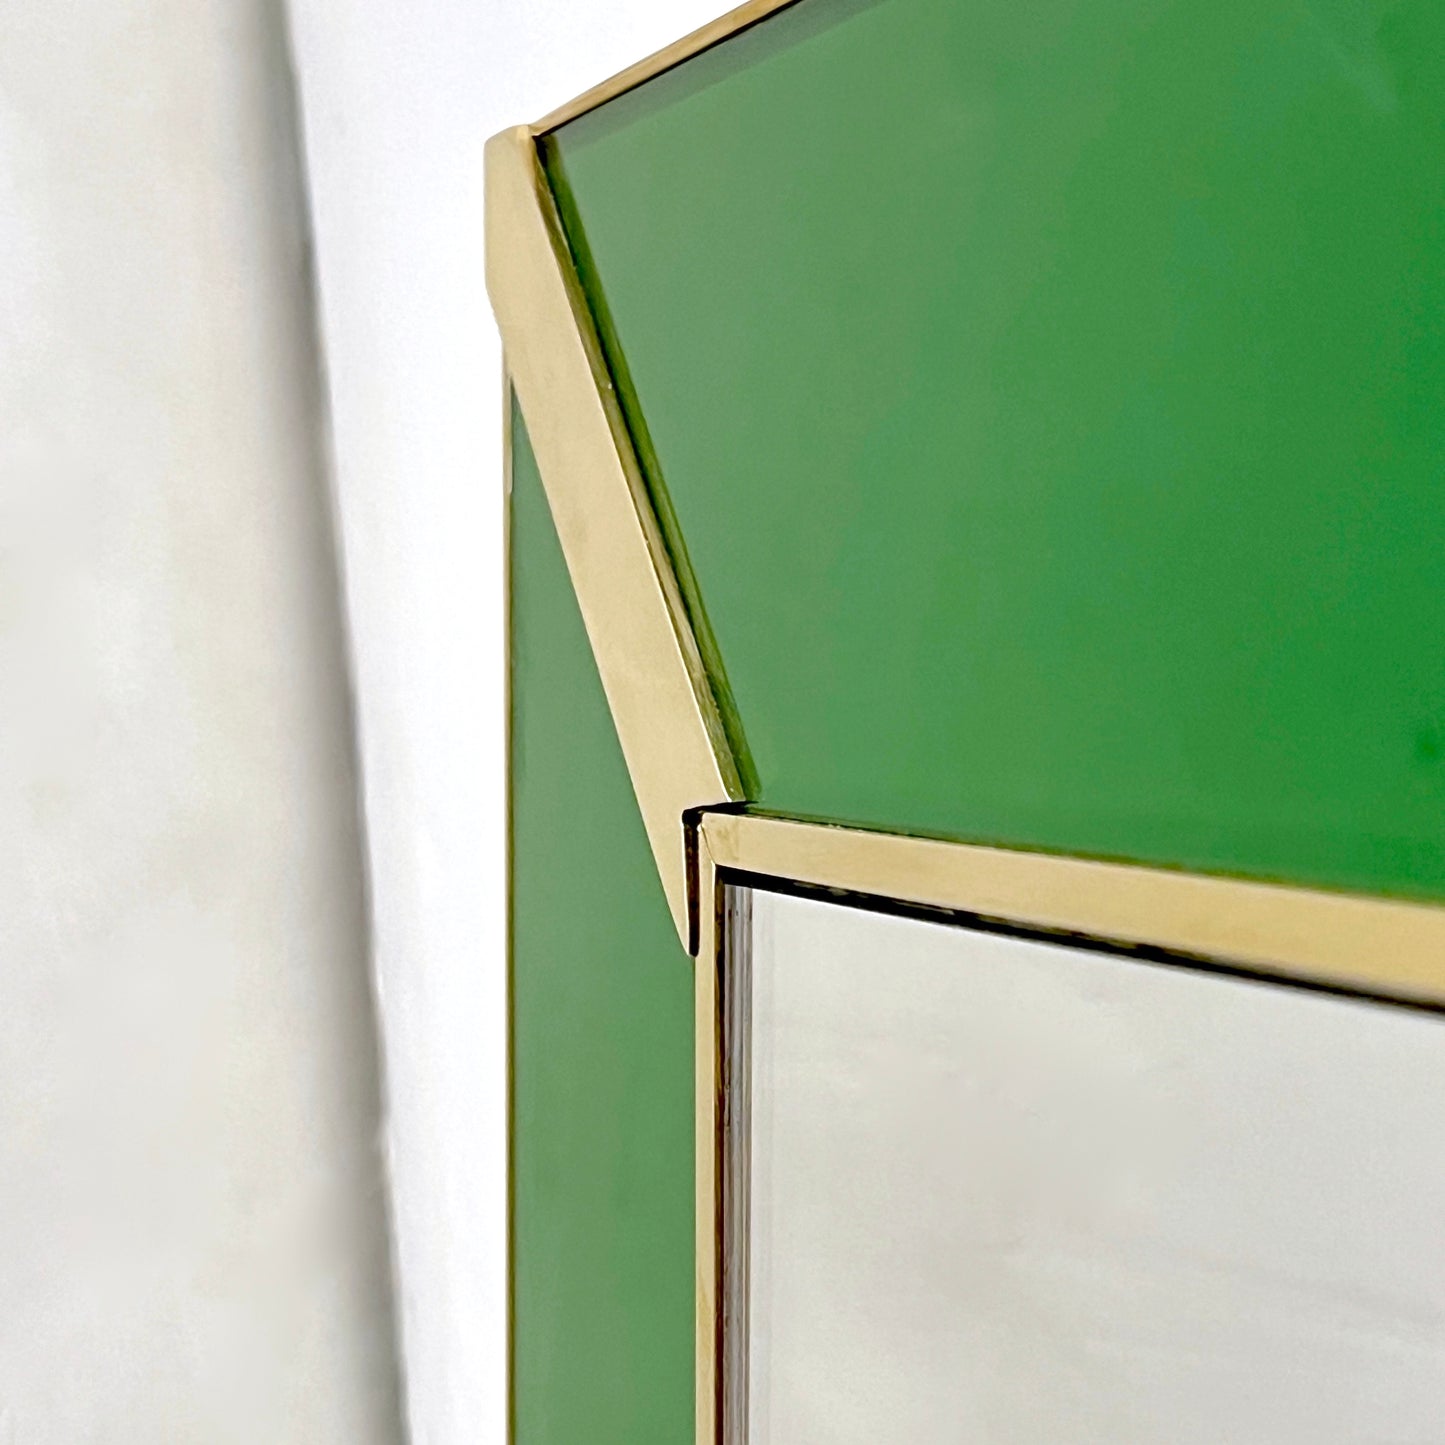 Contemporary Italian Minimalist Design Green Glass Mirror with Brass Accents